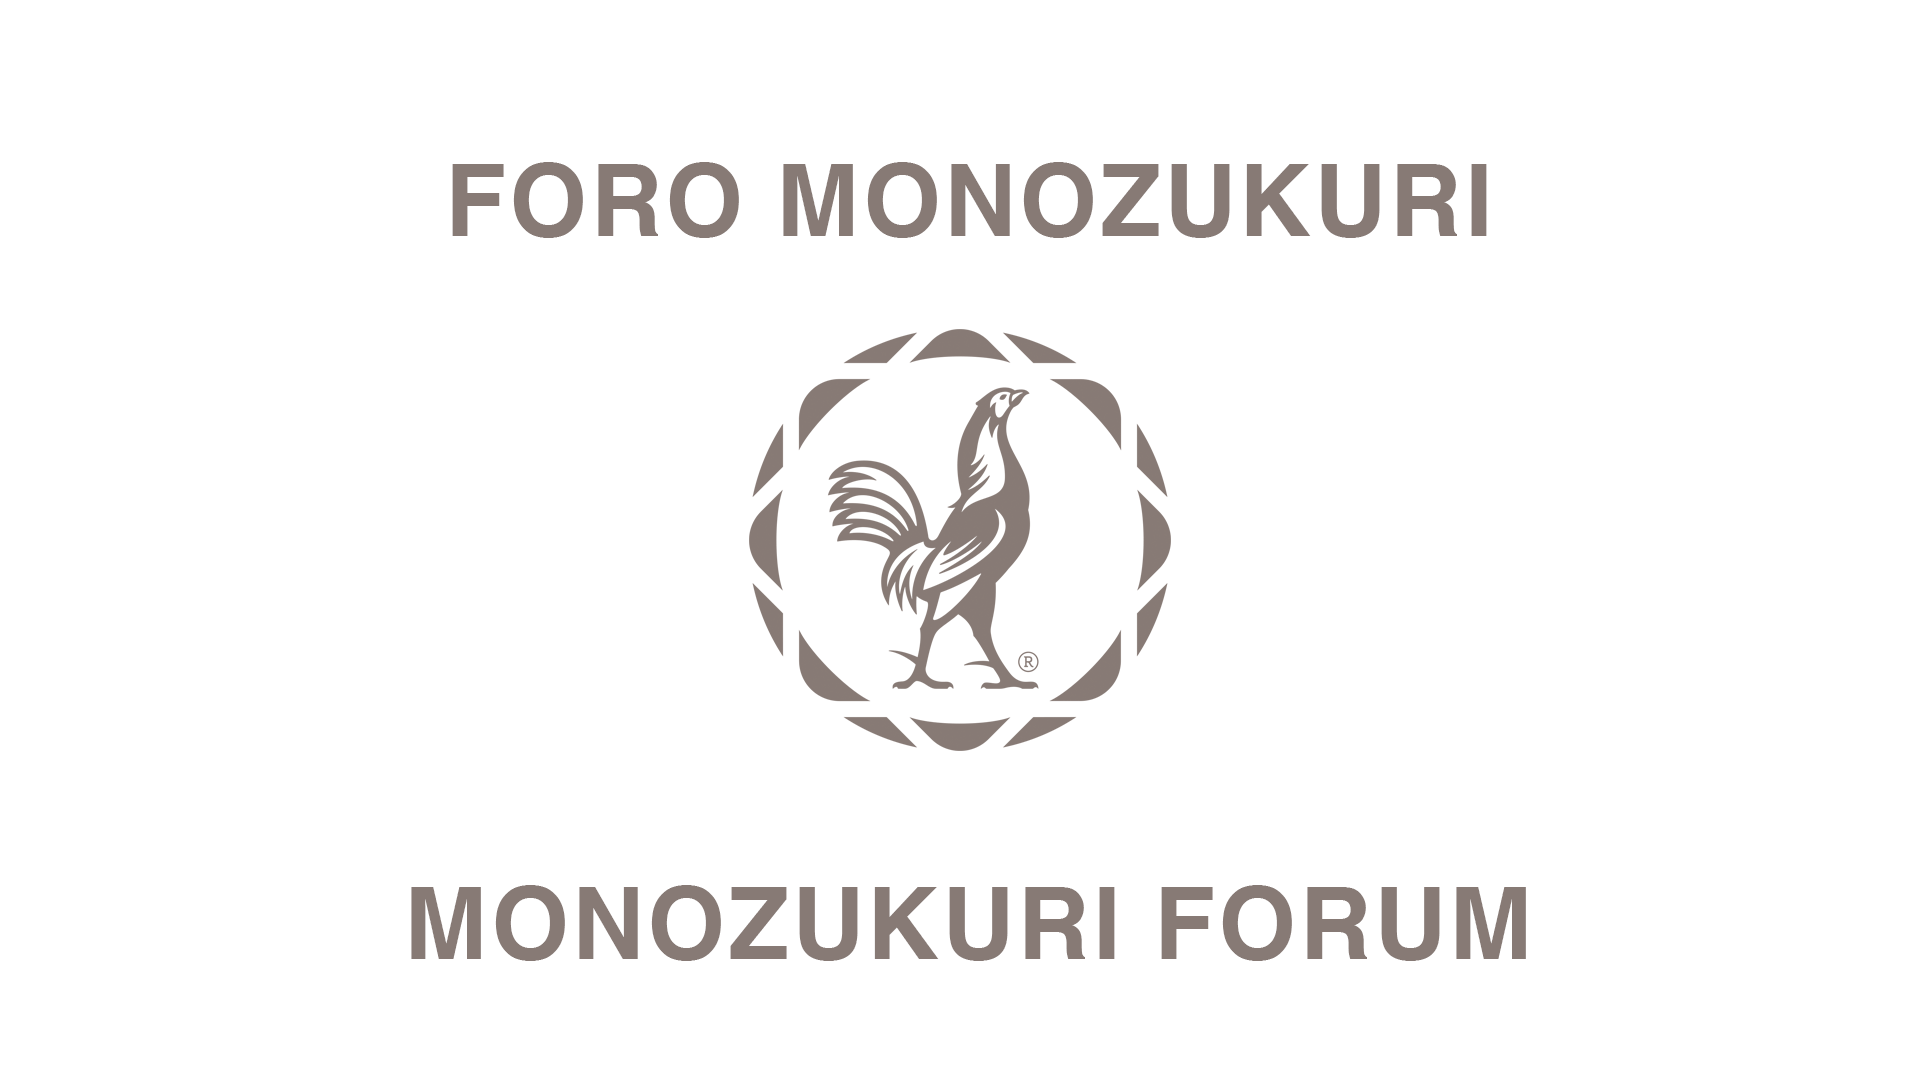 Sauza Logo - Results of the Monozukuri Work Philosophy. The Monozukuri forum at ...